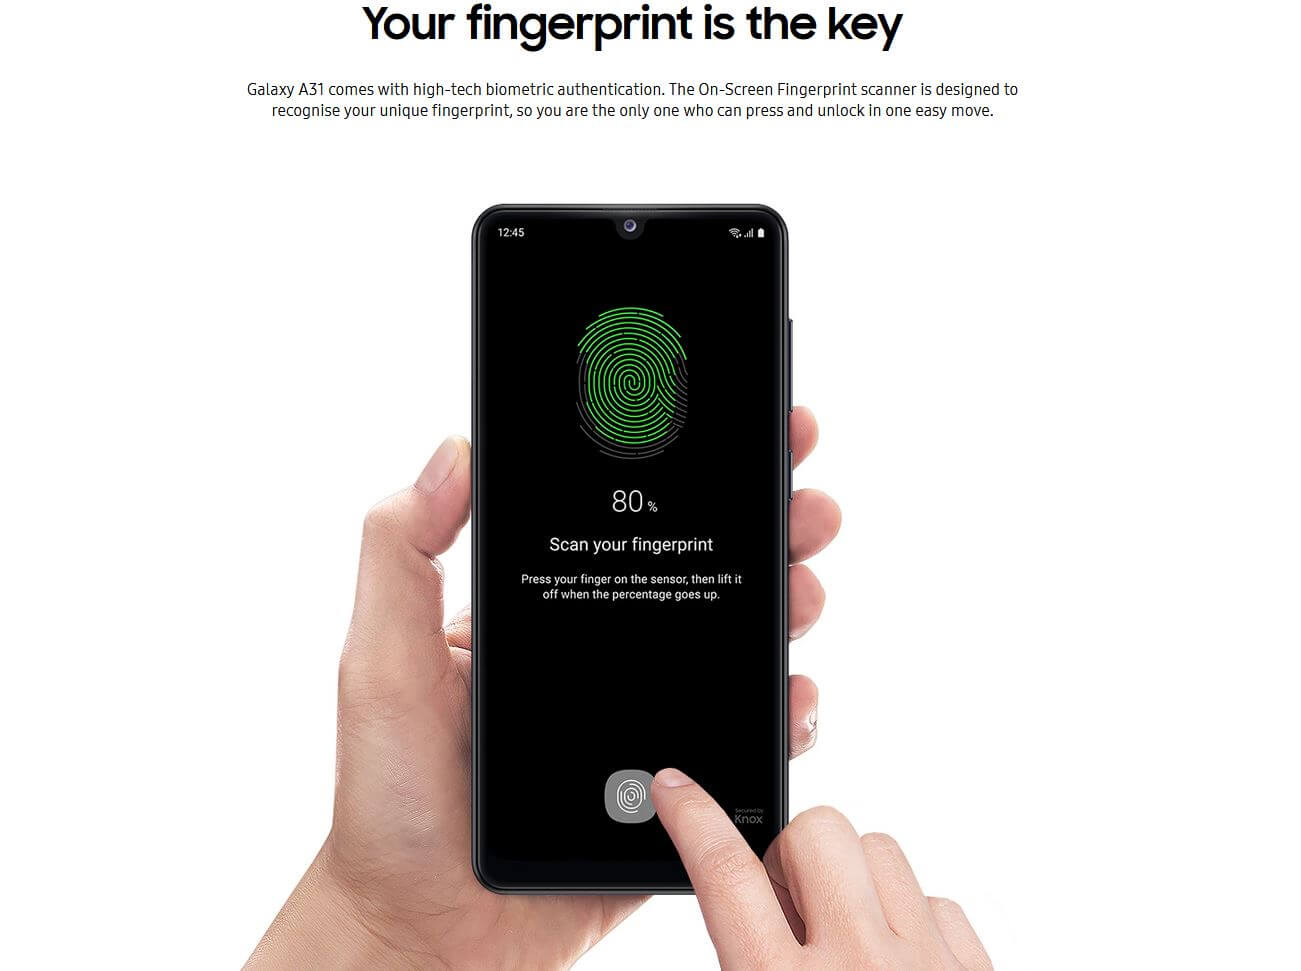 Samsung Galaxy A31 Your Fingerprint is the Key